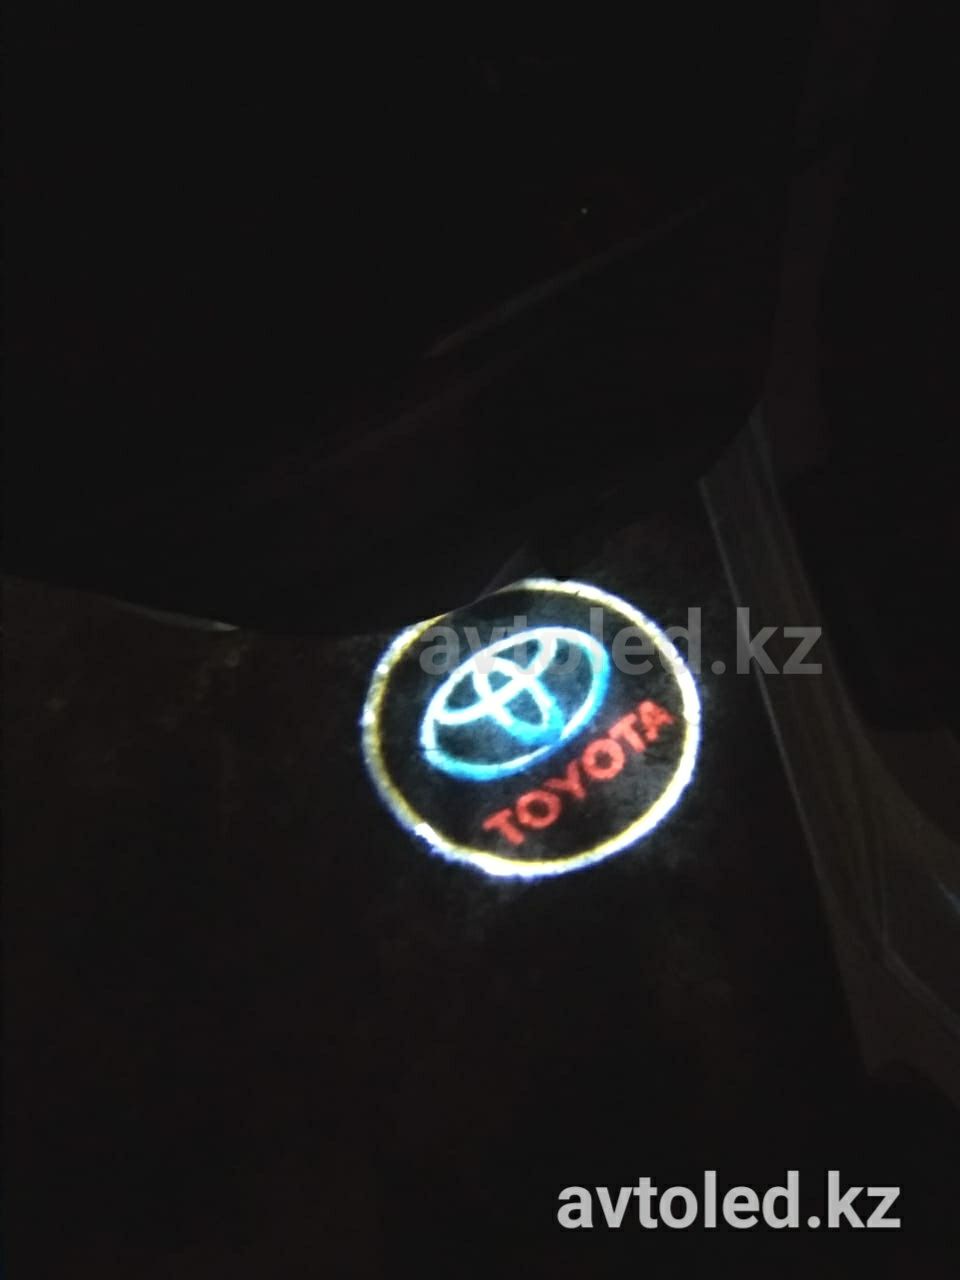 Субару подсветка дверей с логотипом тюнинг авто led подарок мужчине